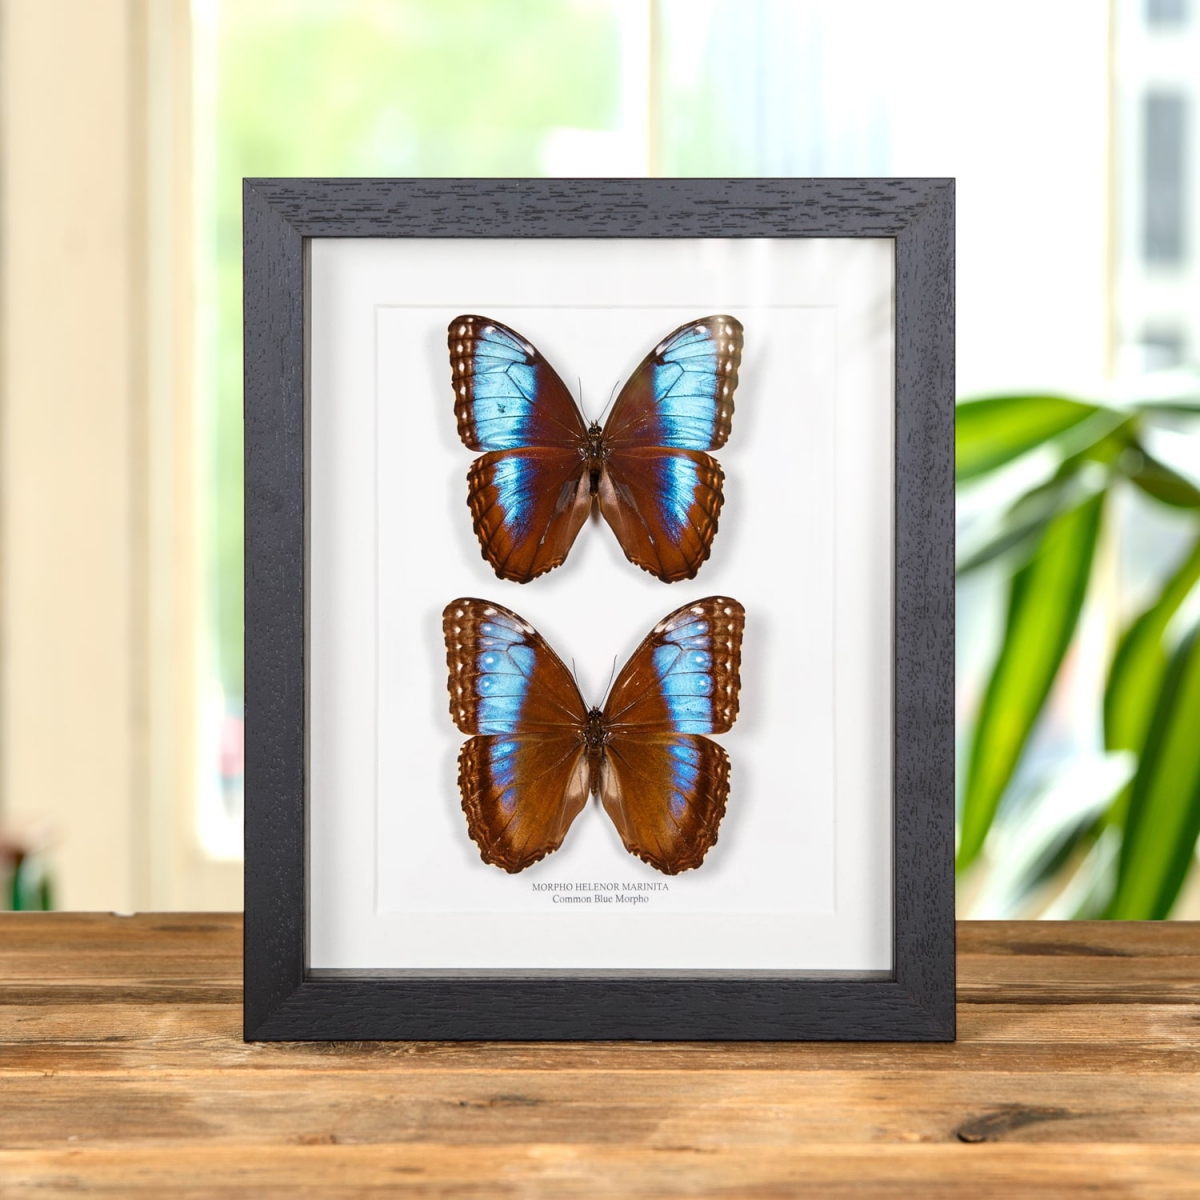 Minibeast Blue Morpho Butterfly Male & Female In Box Frame (Morpho helenor marinita)